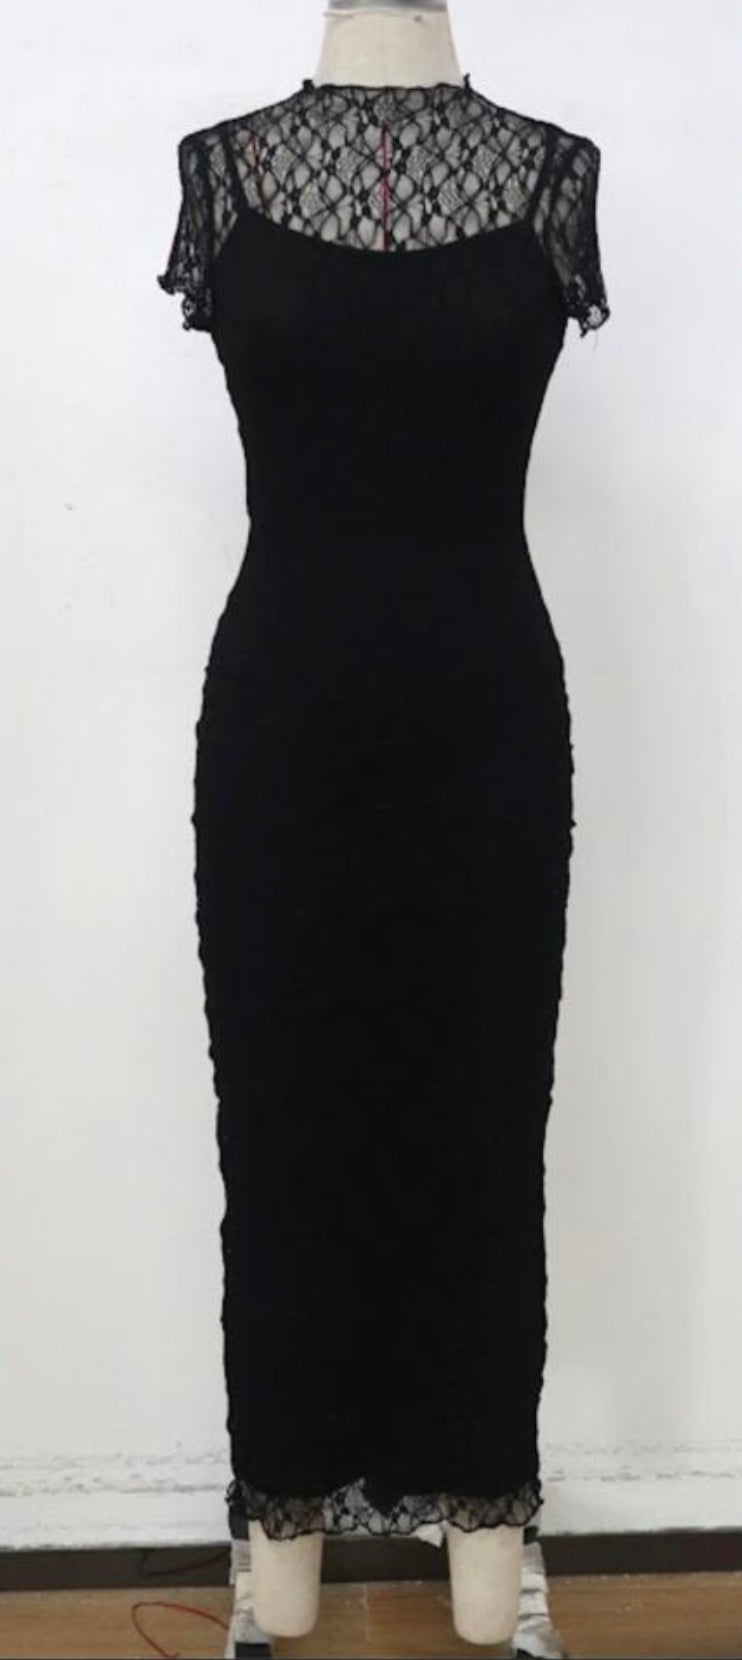 Romance 2pc lace dress - Black